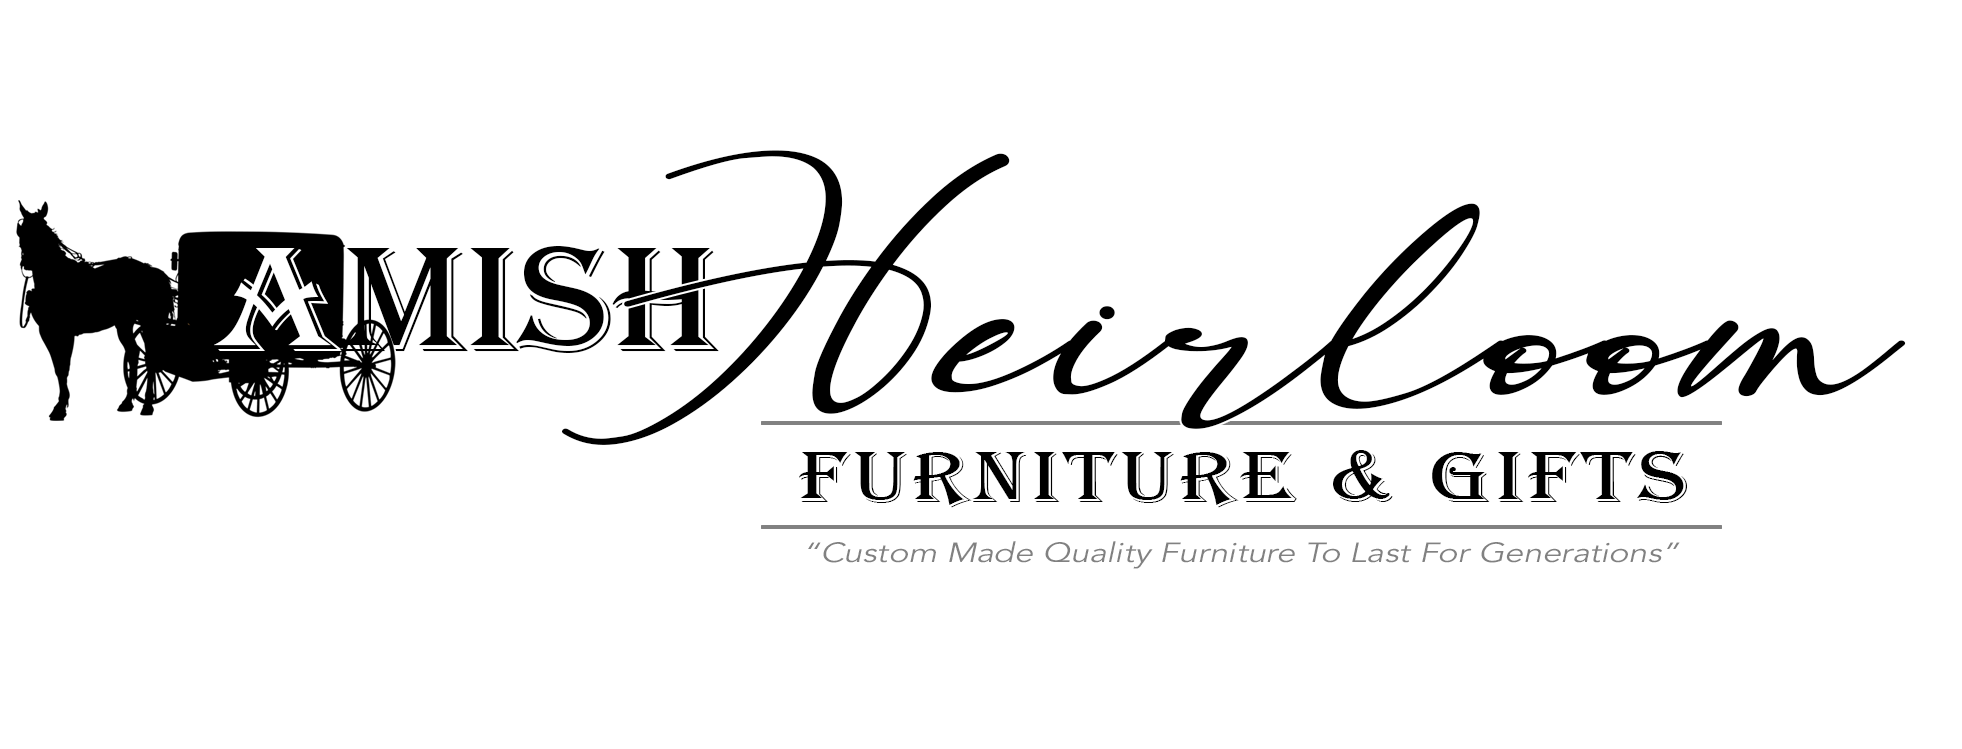 Heirloom Furniture & Gifts